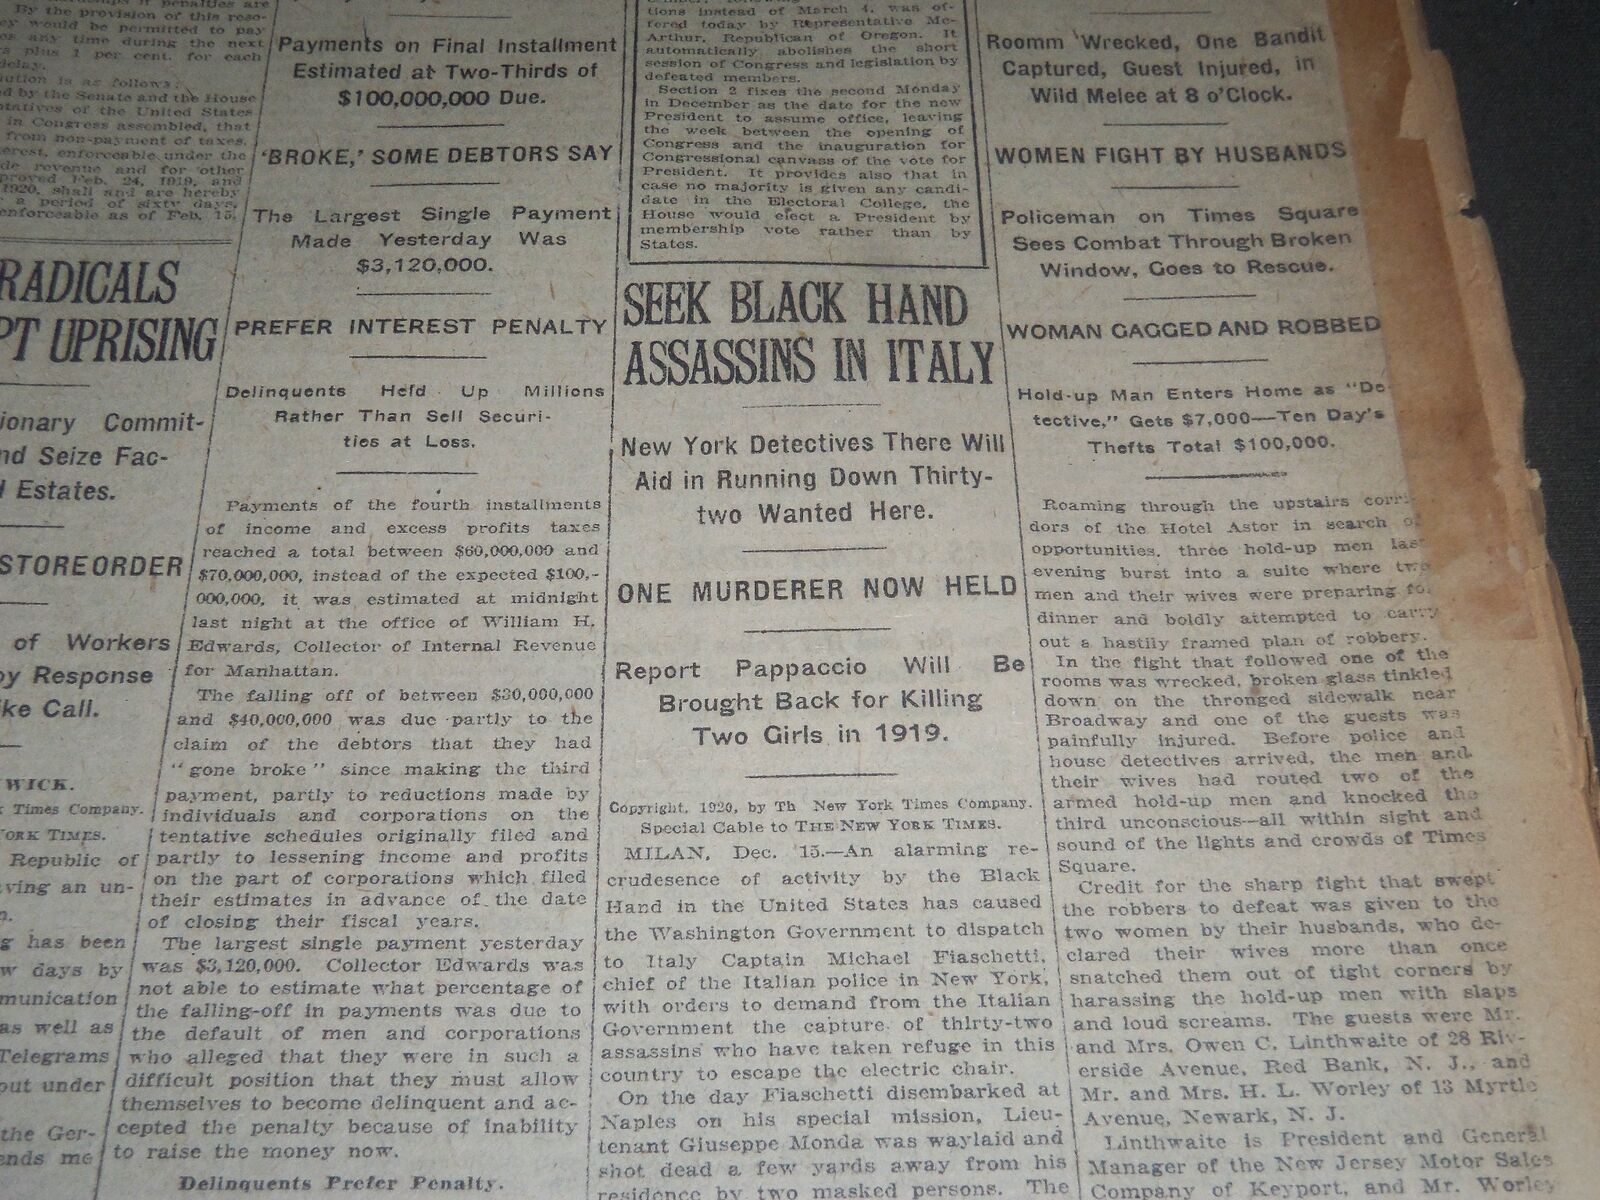 1920 DECEMBER 16 NEW YORK TIMES - SEEK BLACK HAND ASSASSINS IN ITALY - NT 6727